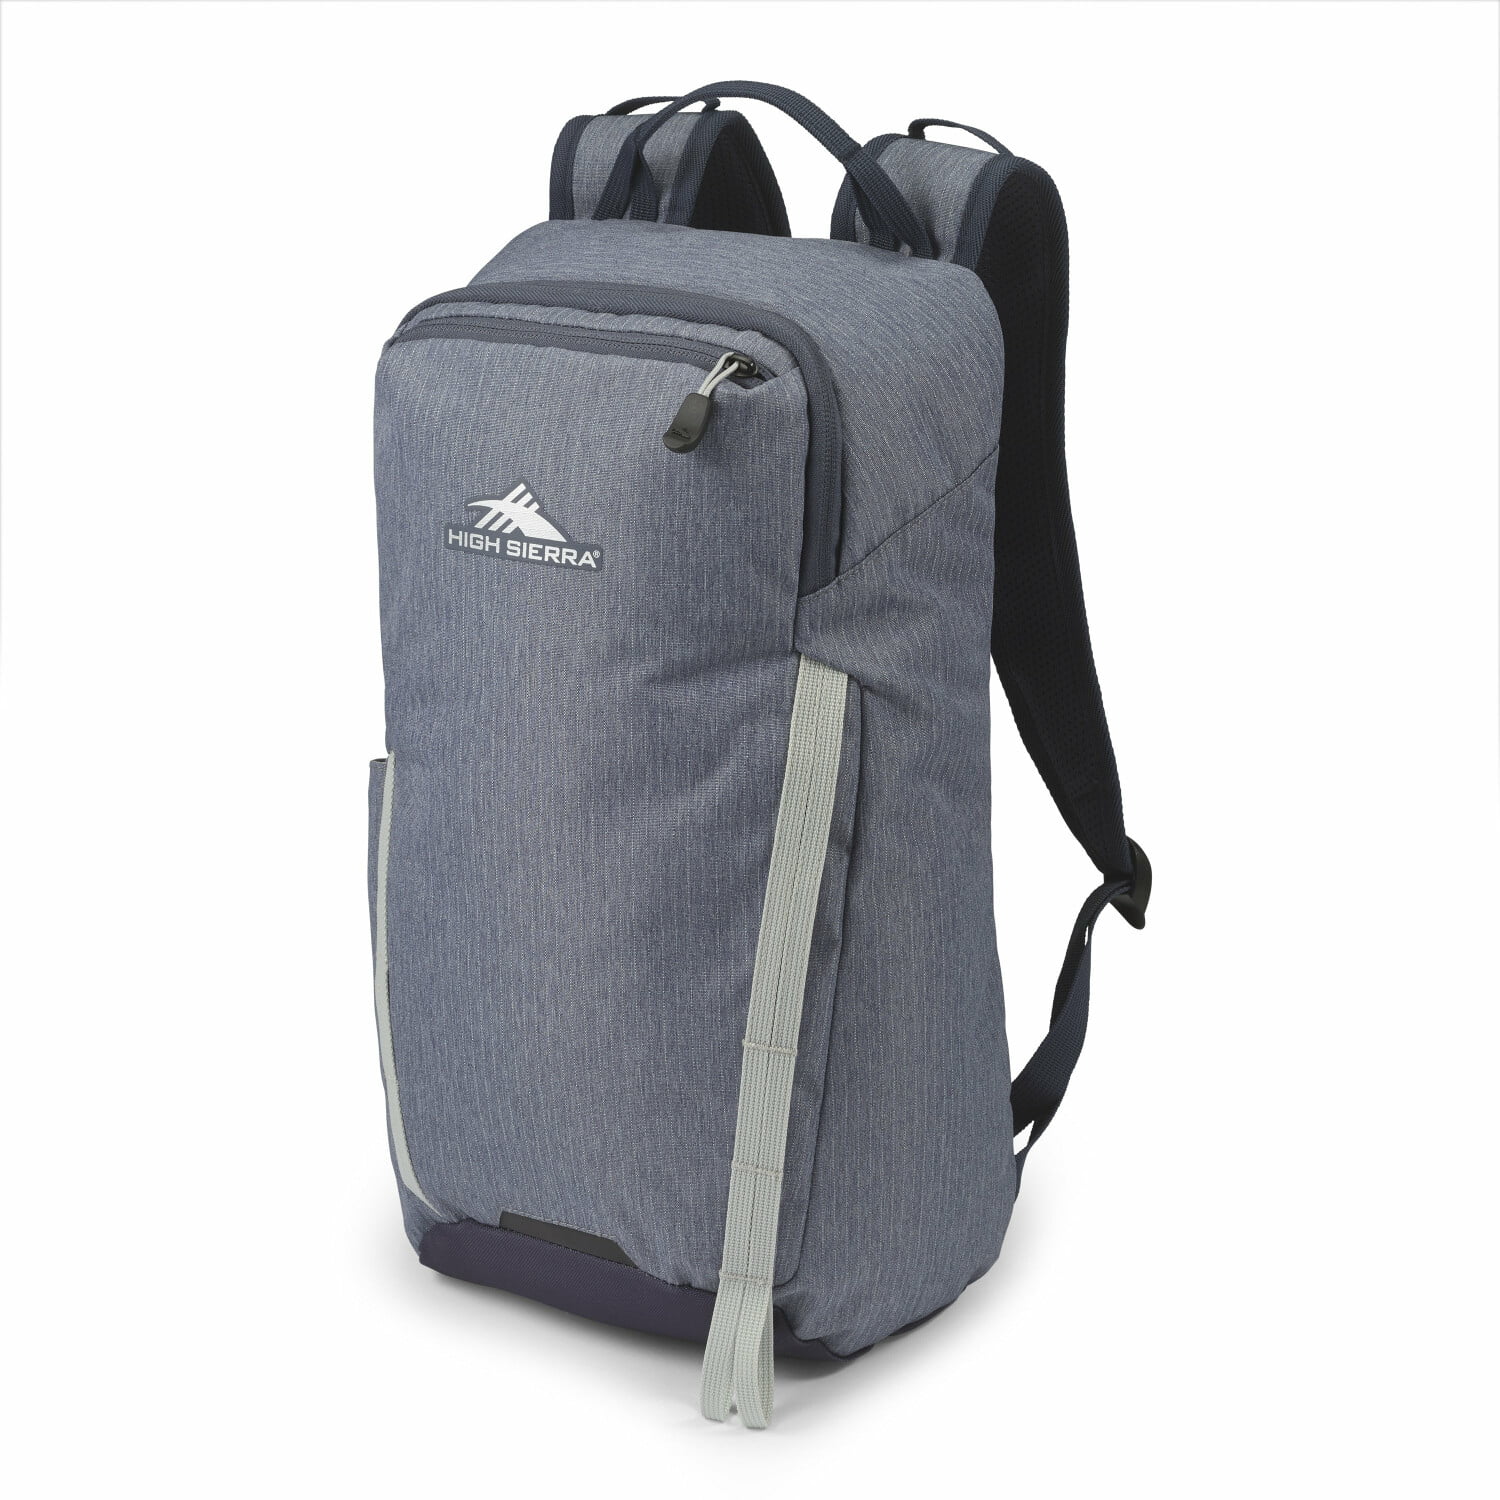 Printed Backpacks Oxford Superbreak Backpack Butterfly Adult Casual Travel Daypack Slim Laptop Schoolbag 